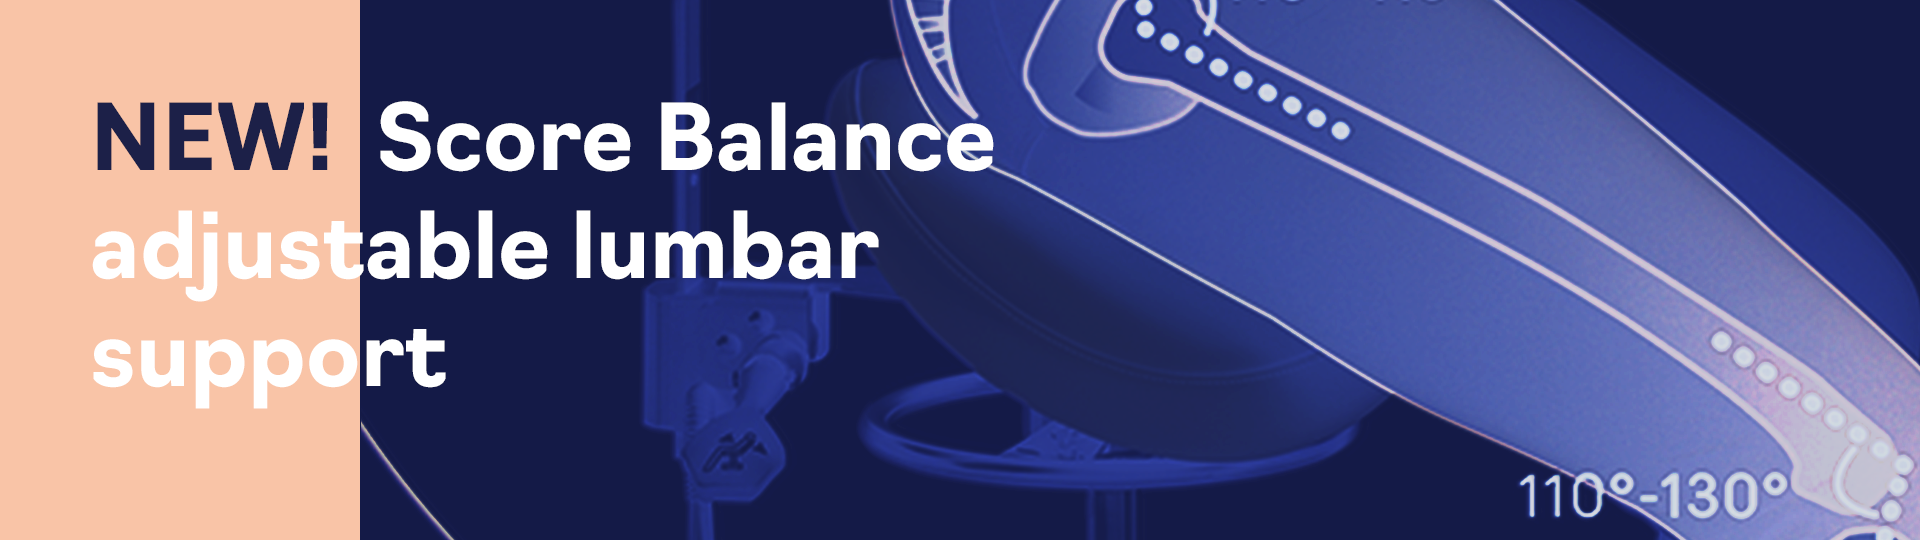 Campaign Score Balance Adjustable Lumbar Support